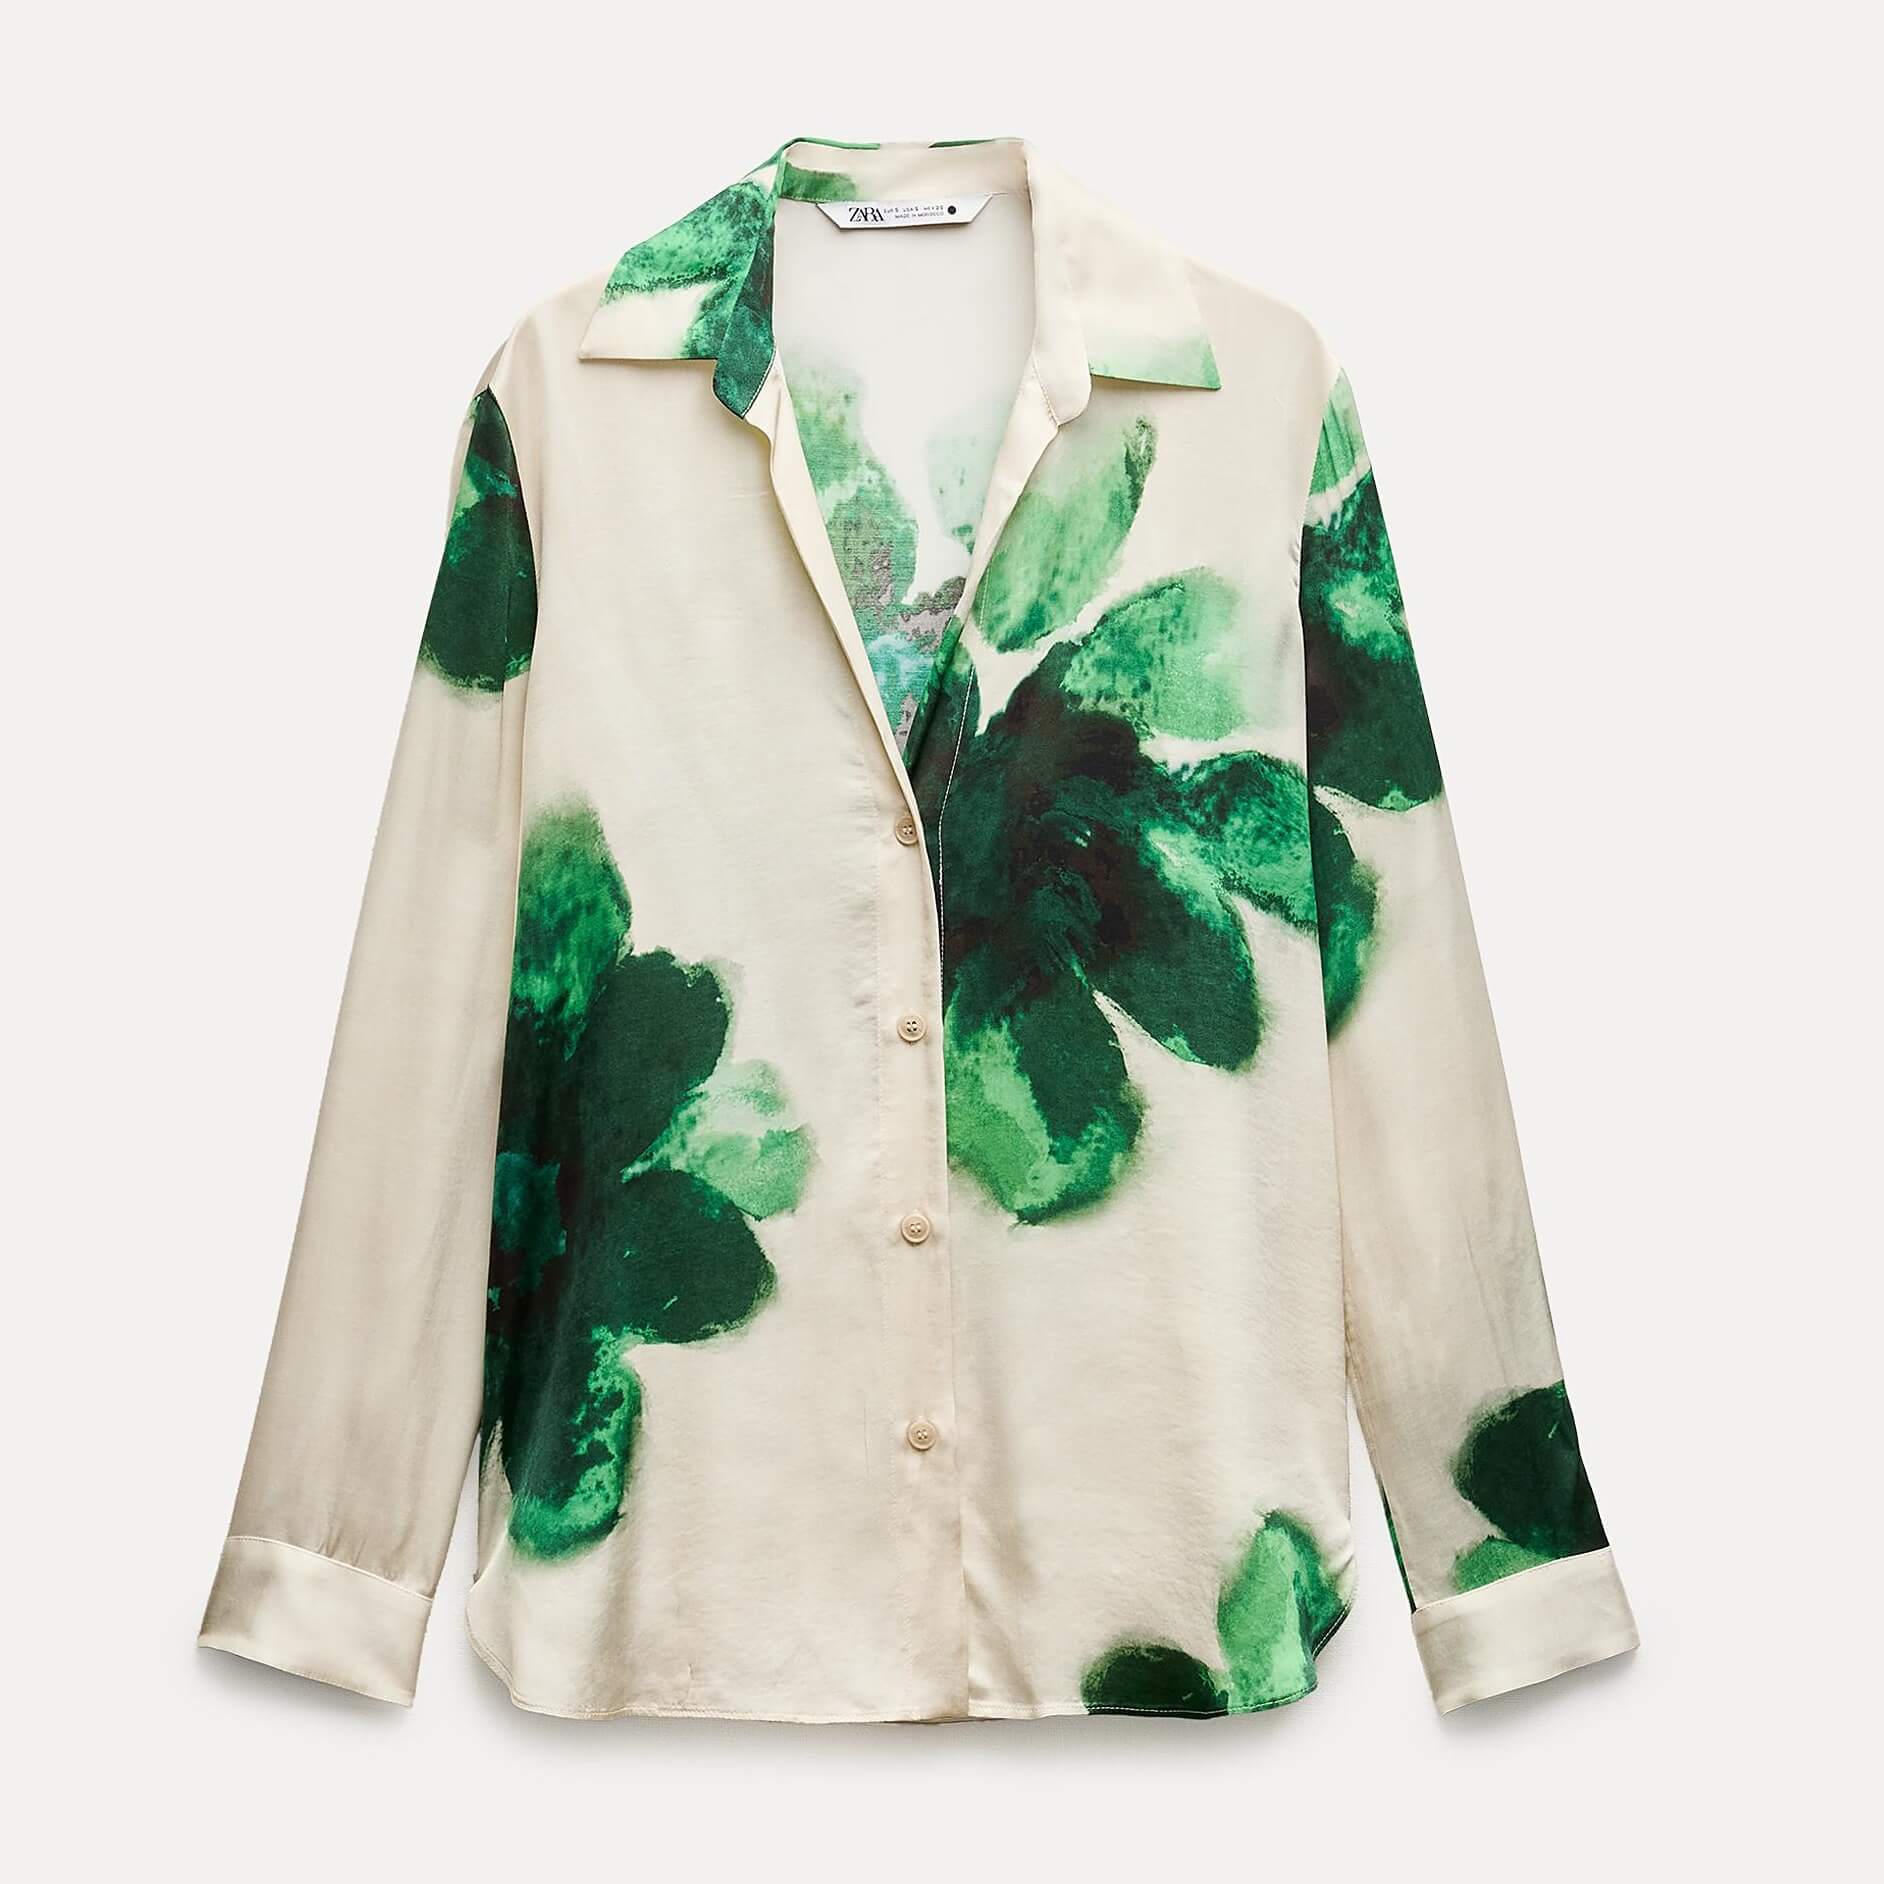 Рубашка Zara ZW Collection Flowing Printed, бежевый/зеленый рубашка zara flowing satin синий размер s